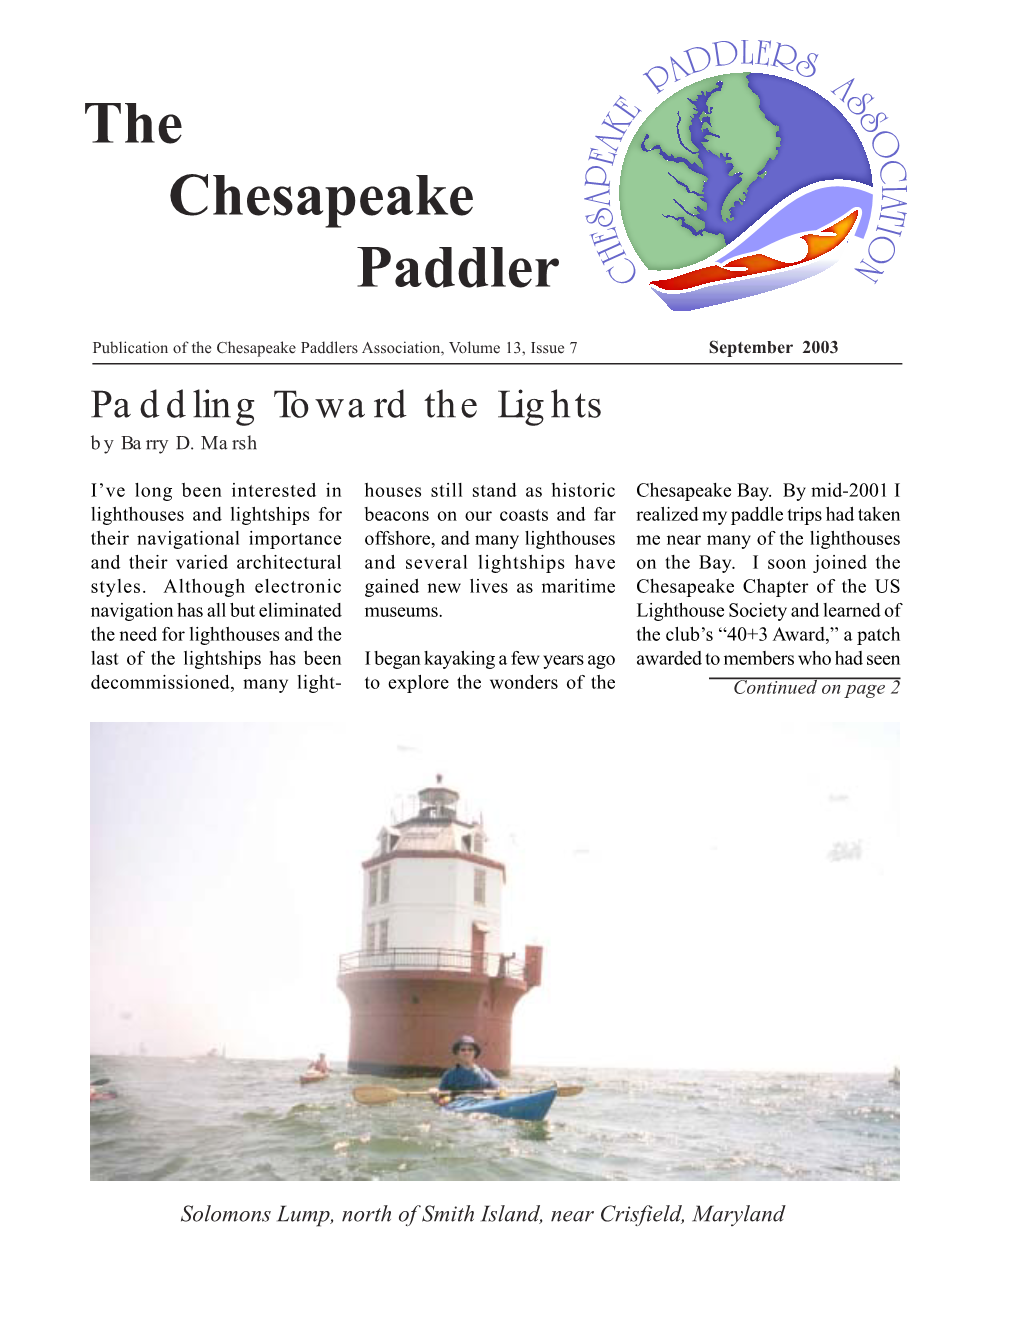 The Chesapeake Paddler